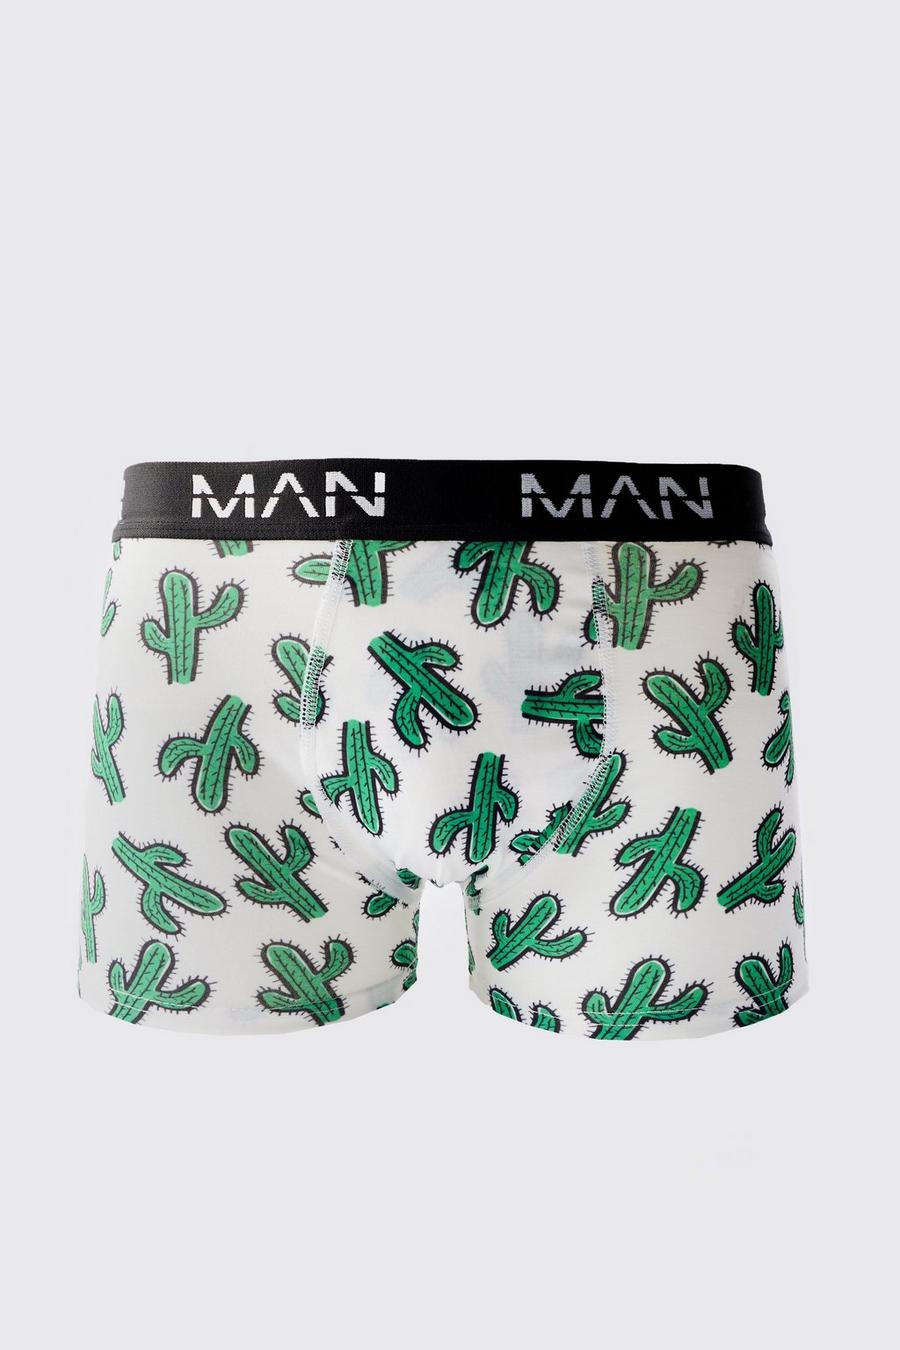 Multi Man Cactus Printed Boxers